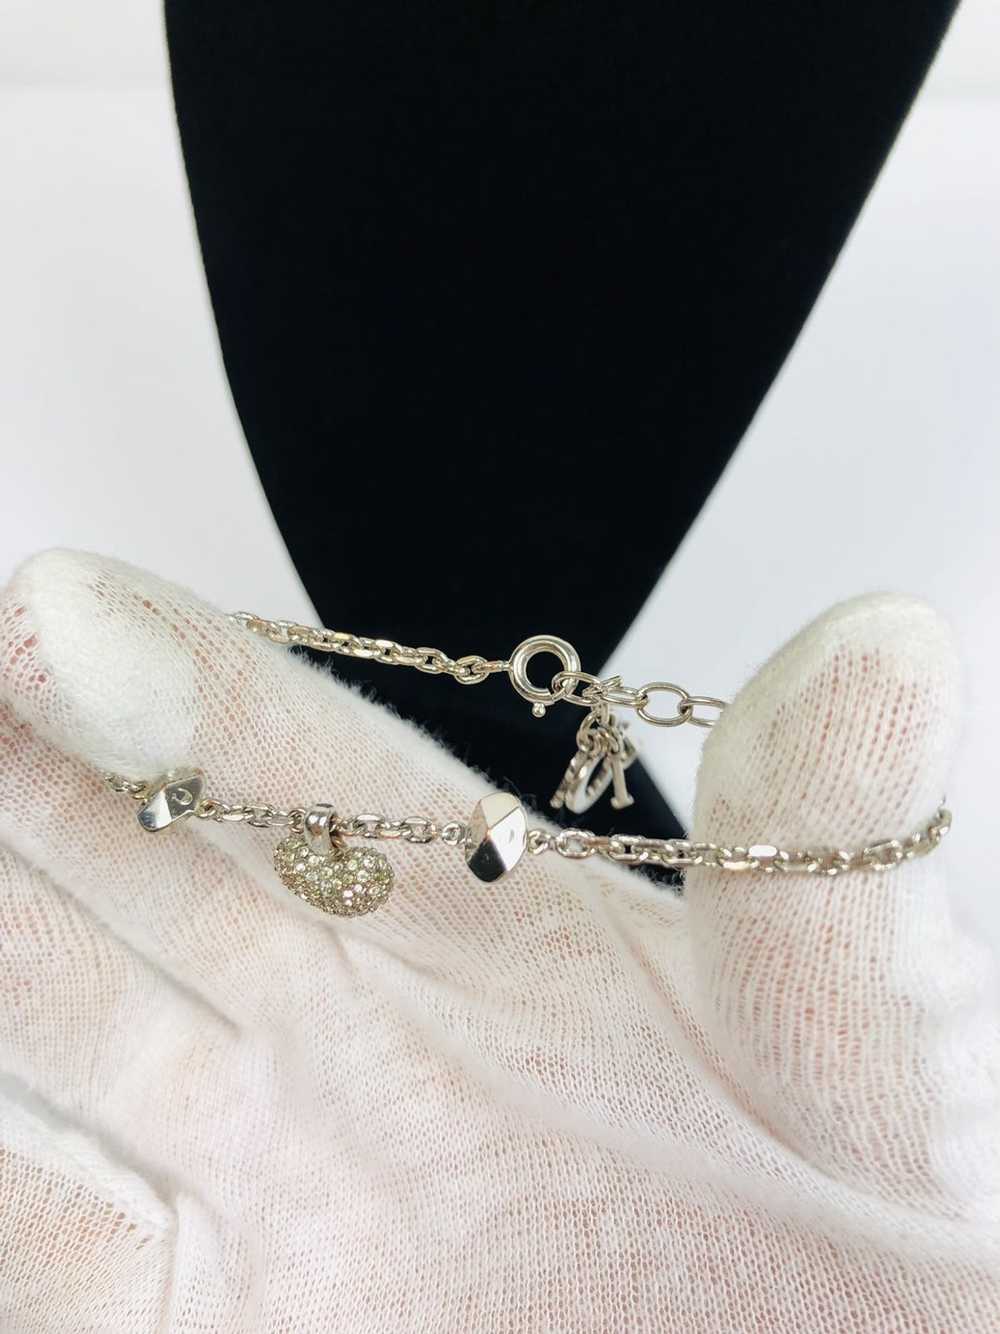 Dior Dior spell out heart bracelet - image 1